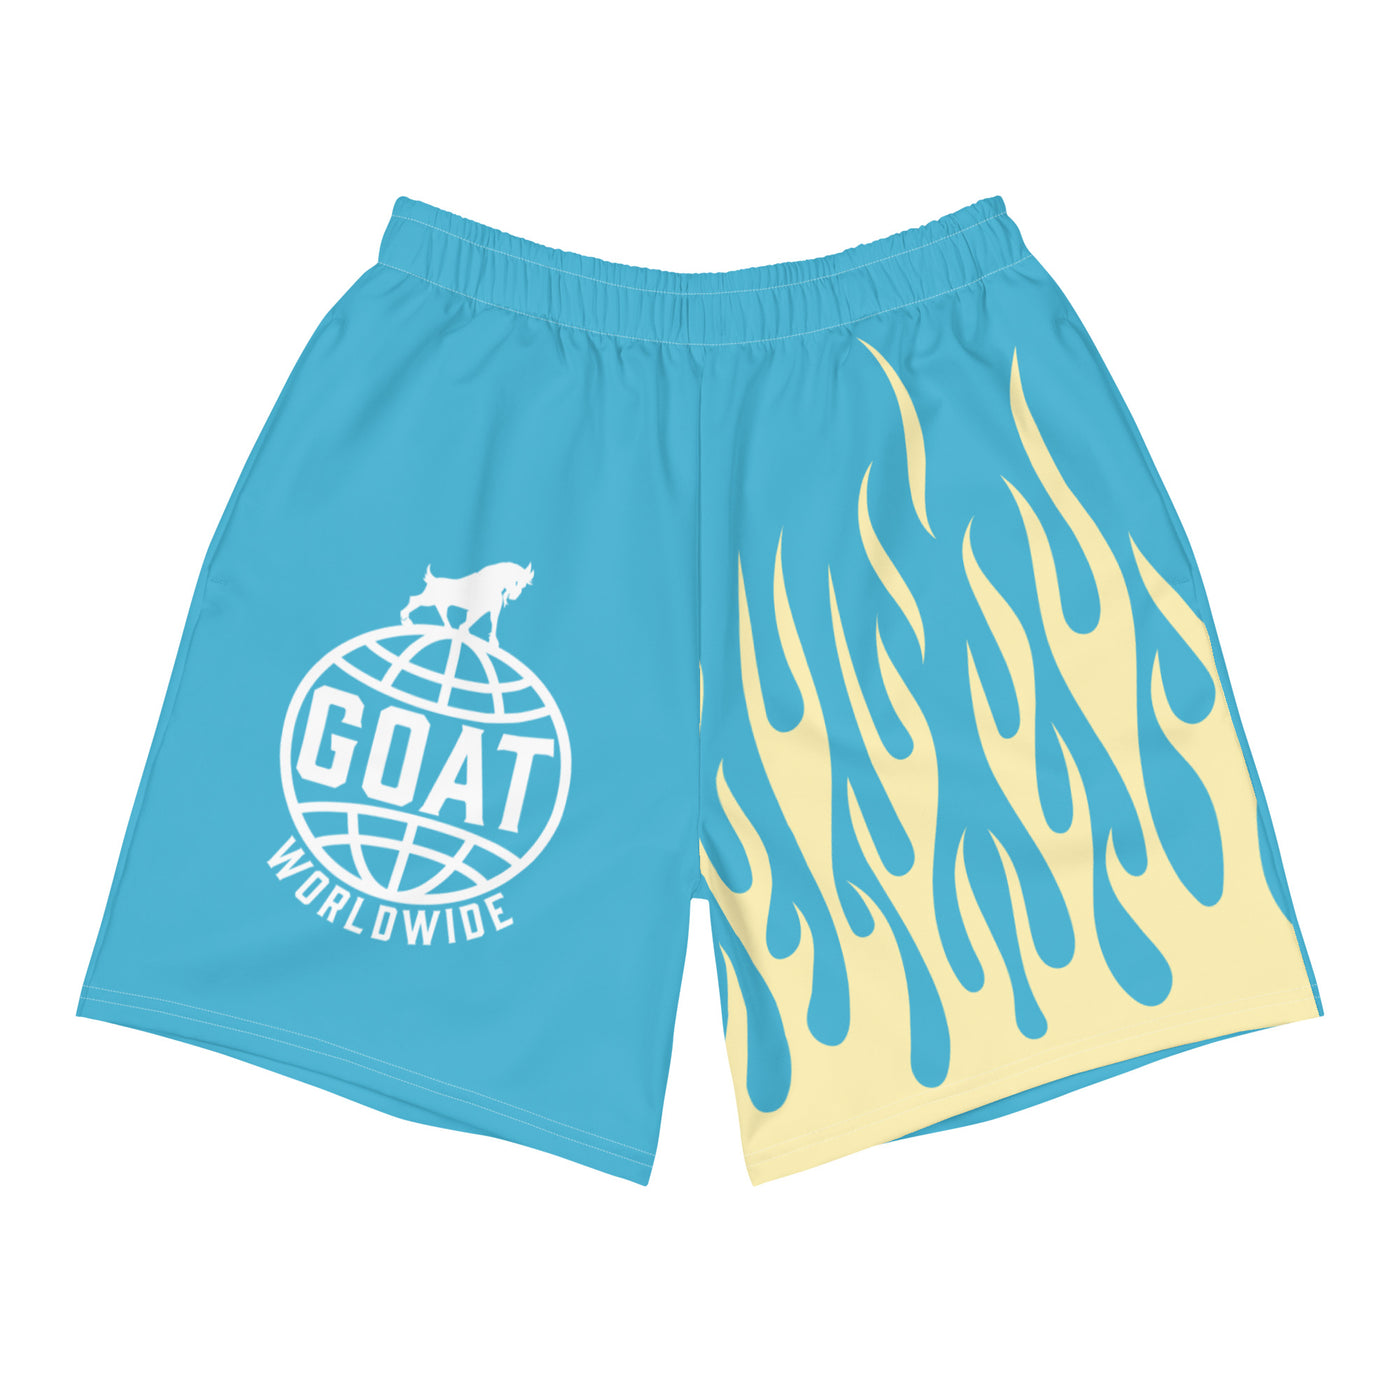 GOAT Worldwide Fire Training Shorts (Blue)